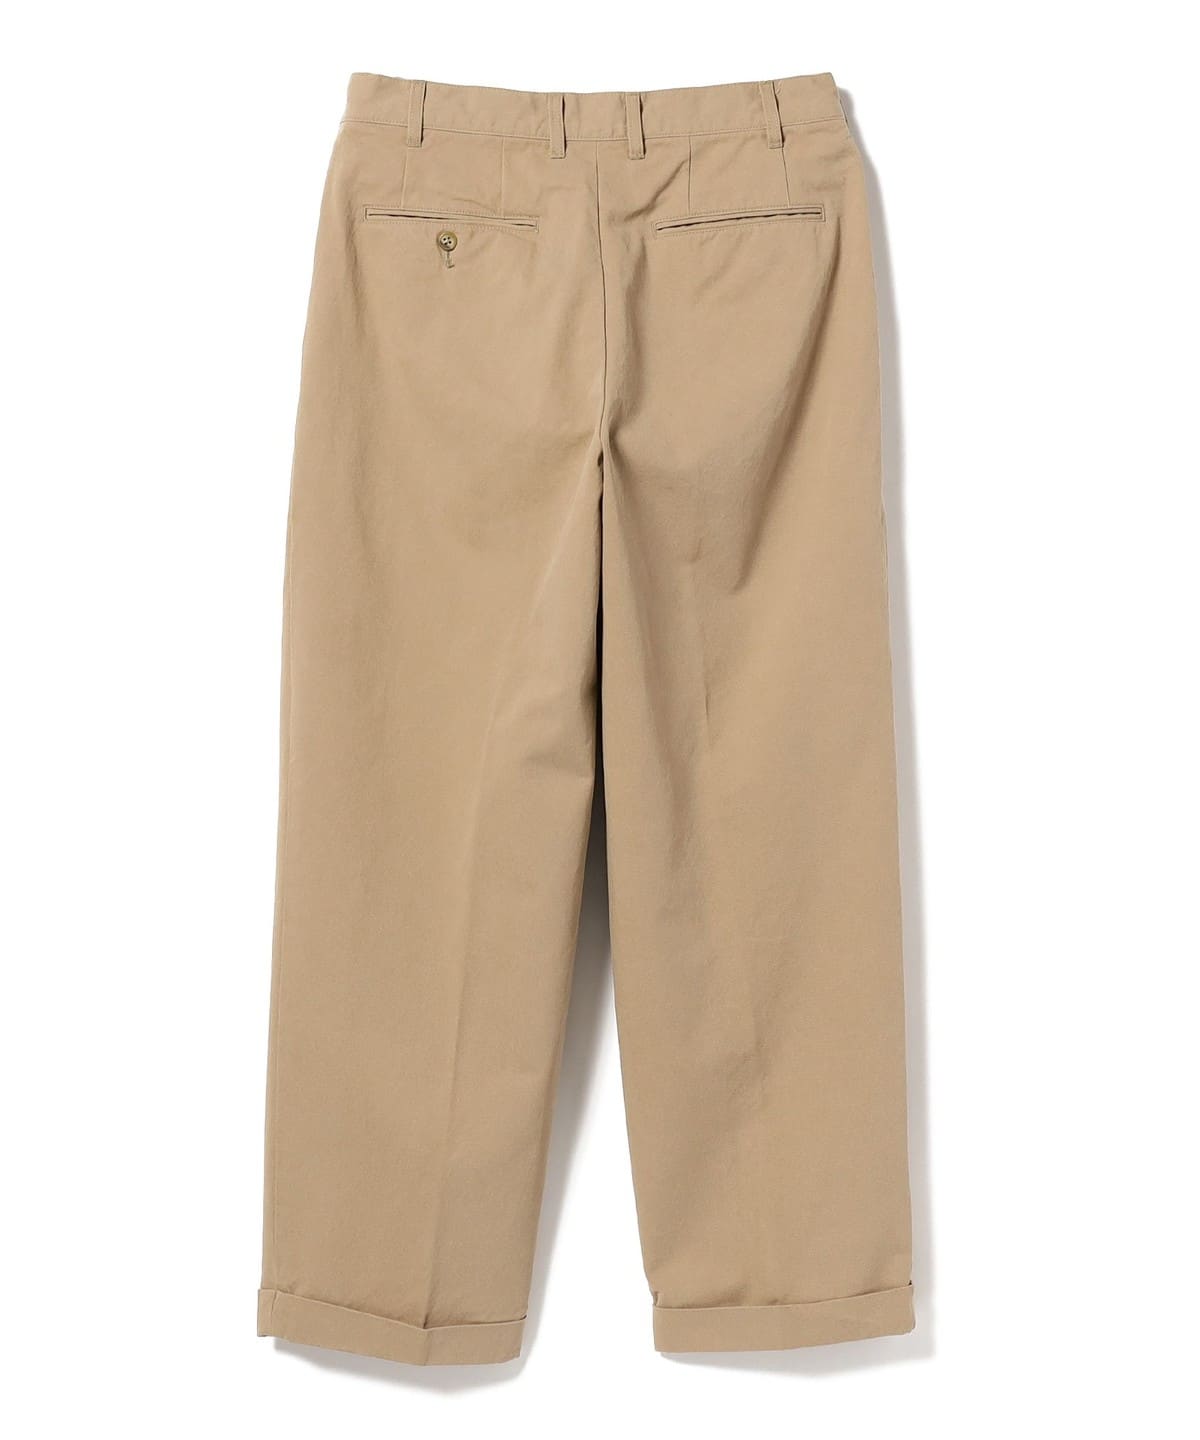 BEAMS PLUS / 2 Pleats Trousers Twill - Chino Pants